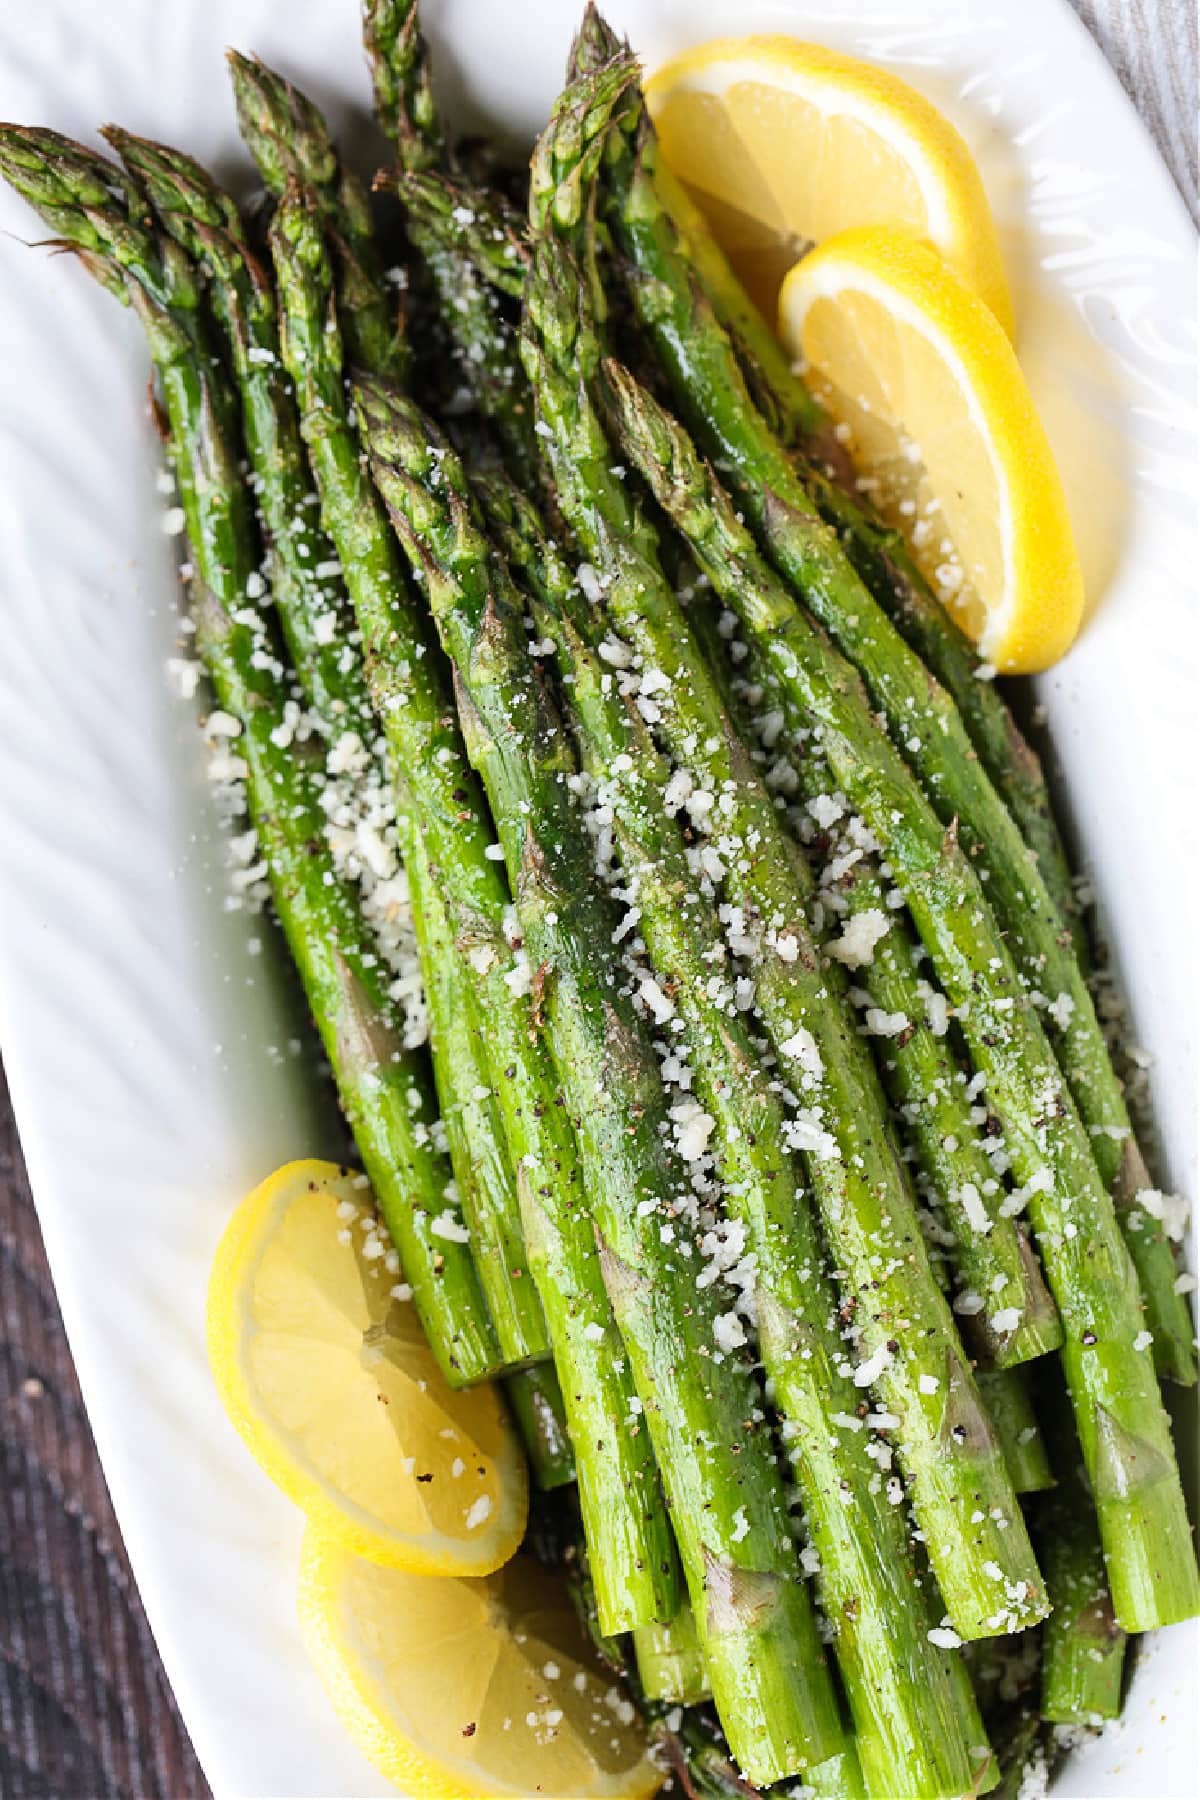 asparagus on platter with lemon slices